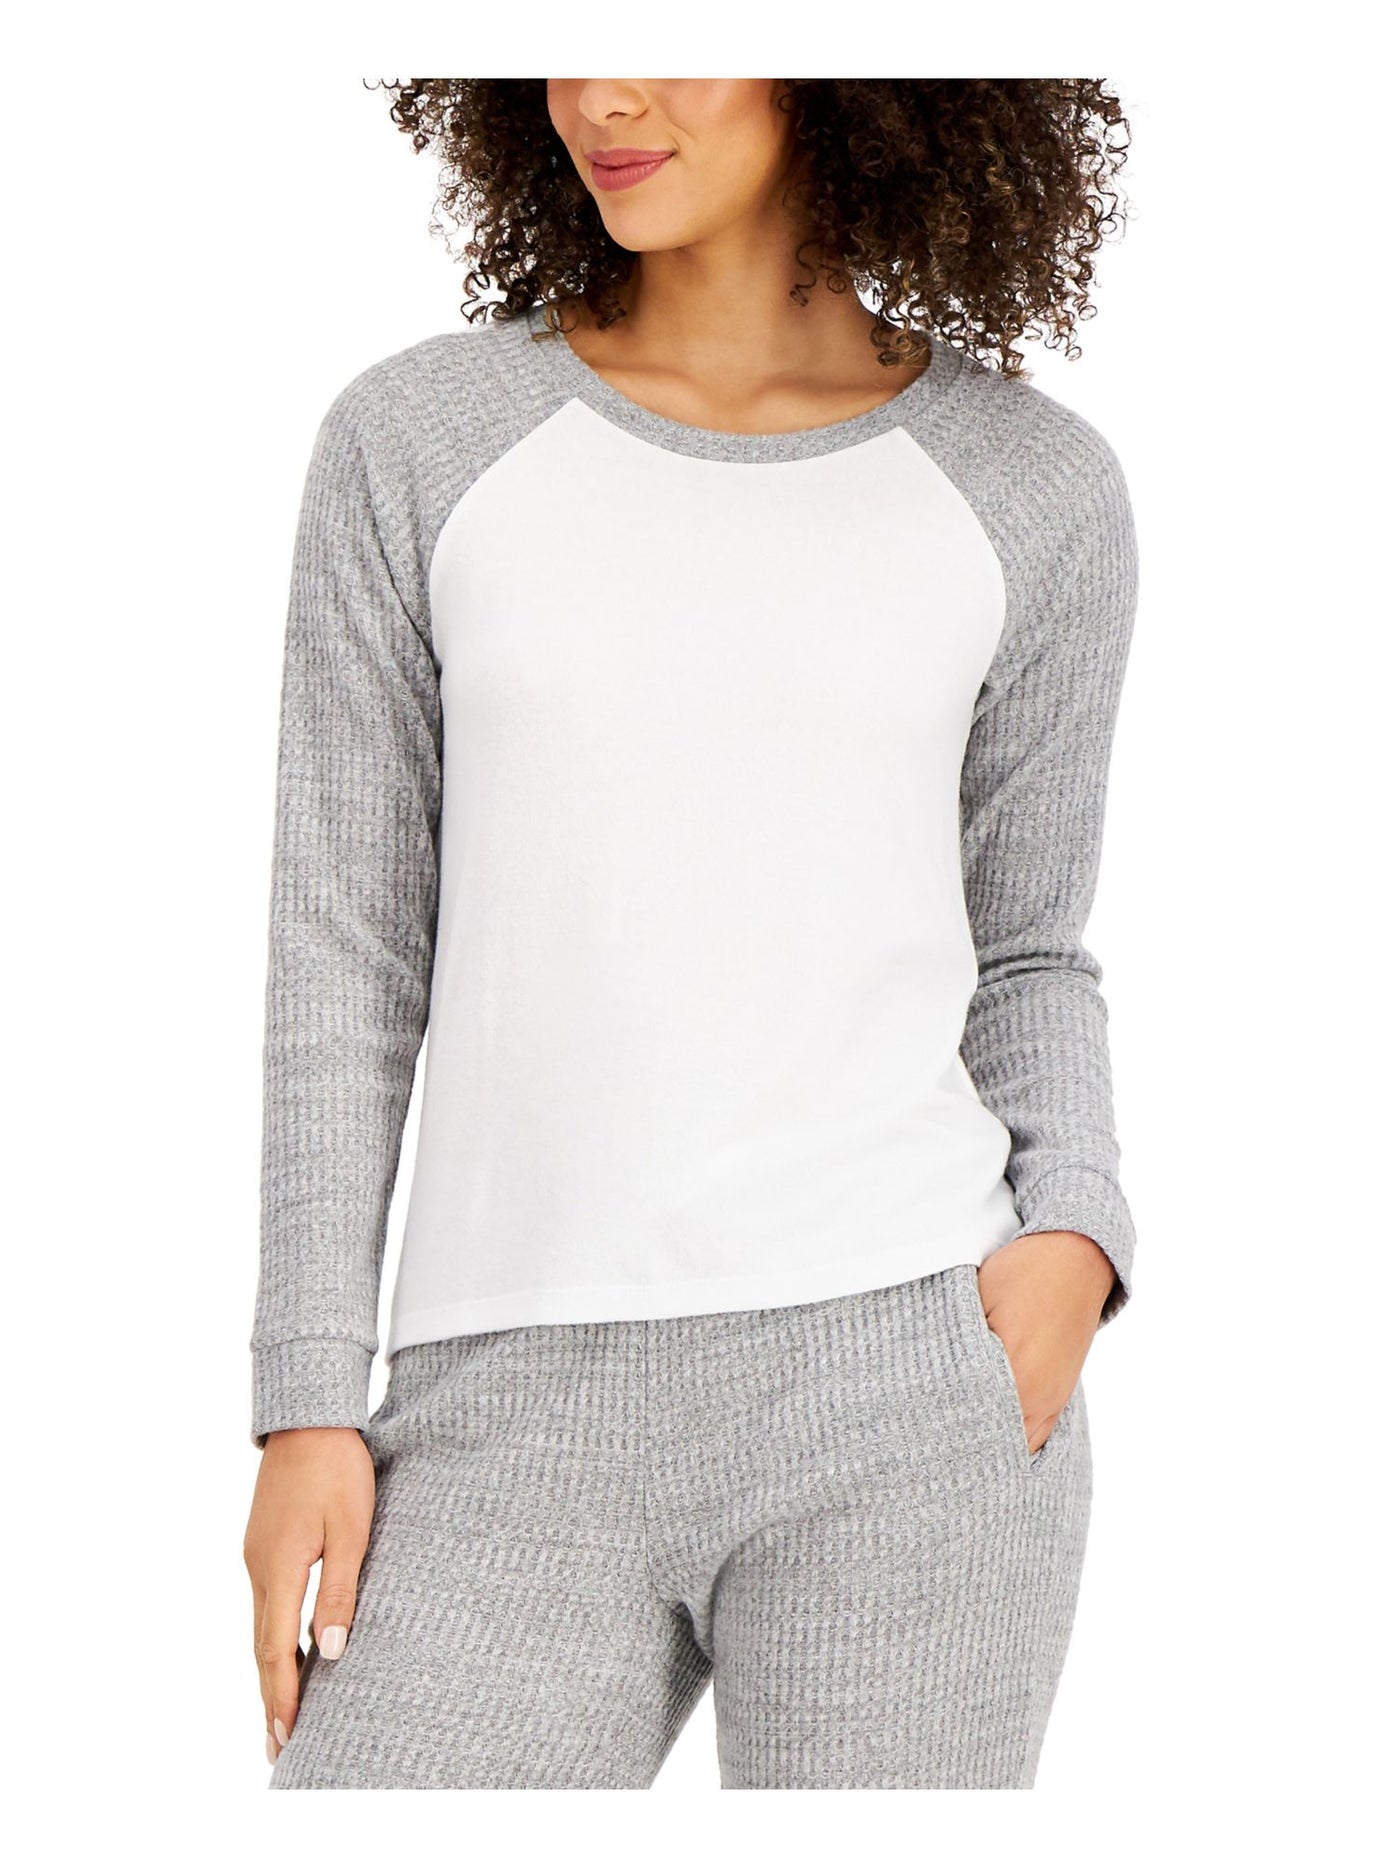 ALFANI Intimates Gray Sleep Shirt Pajama Top XS